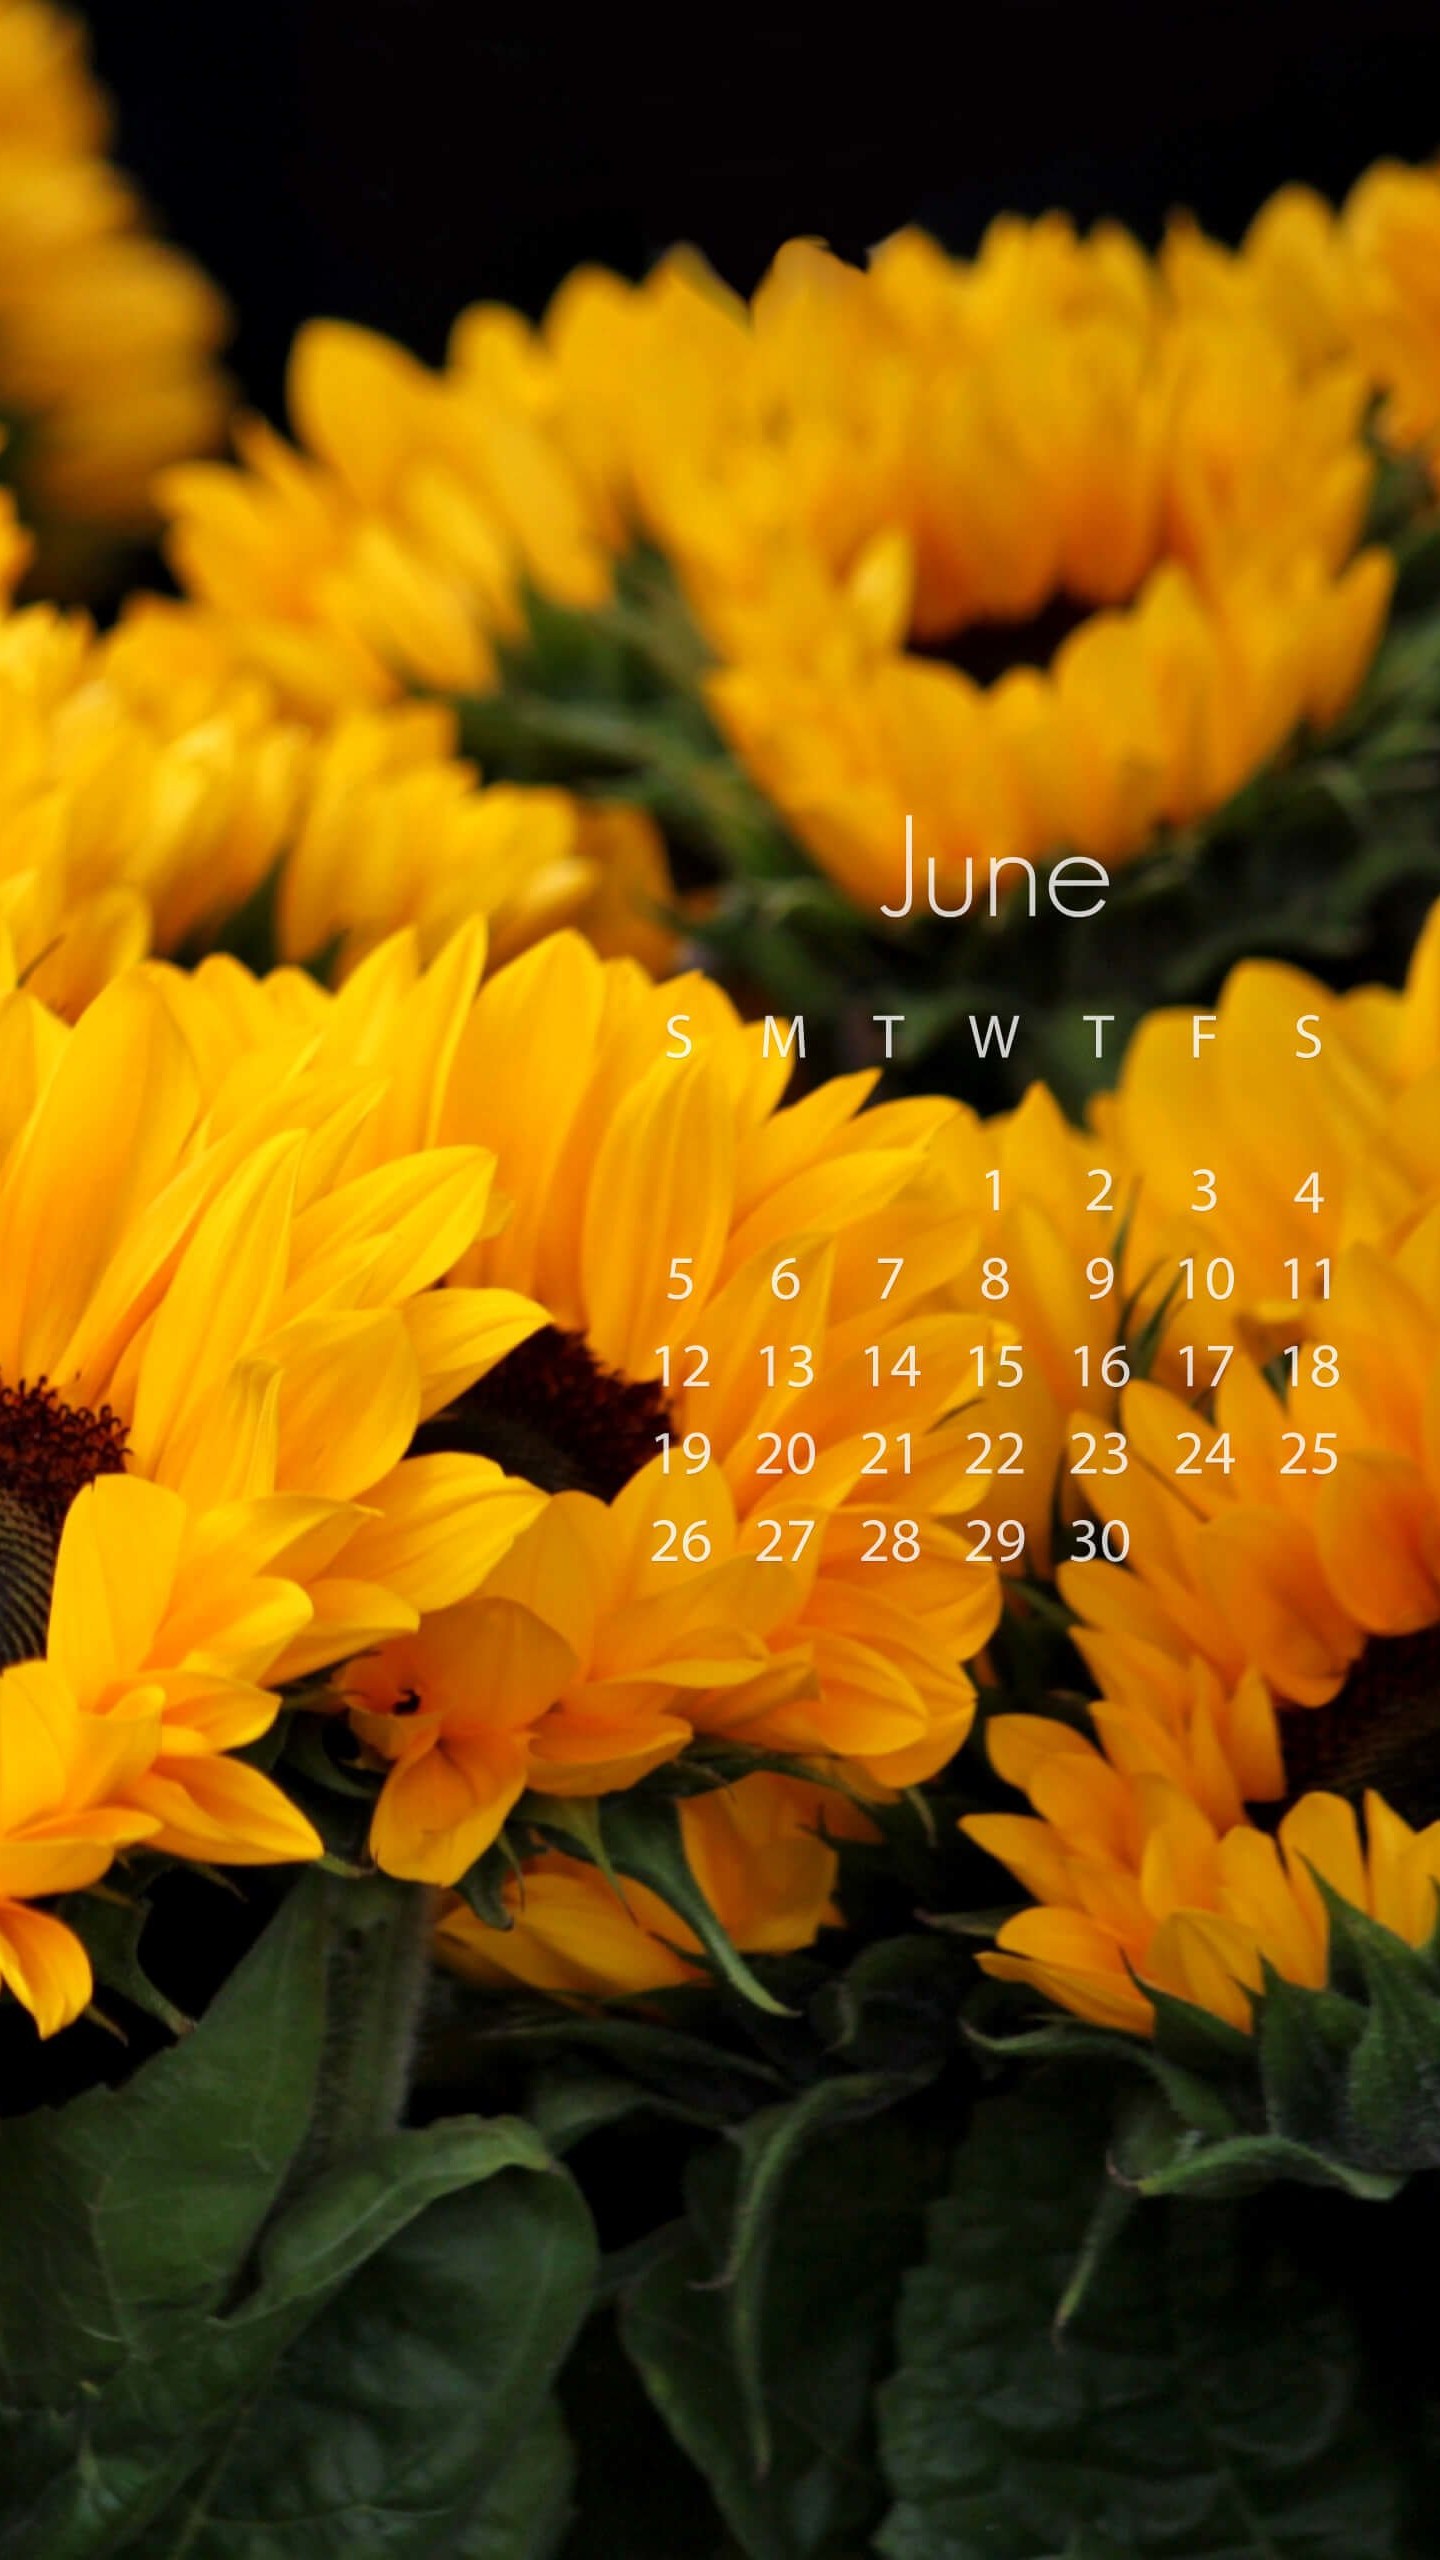 June 2016 Calendar Wallpaper for Google Nexus 6P